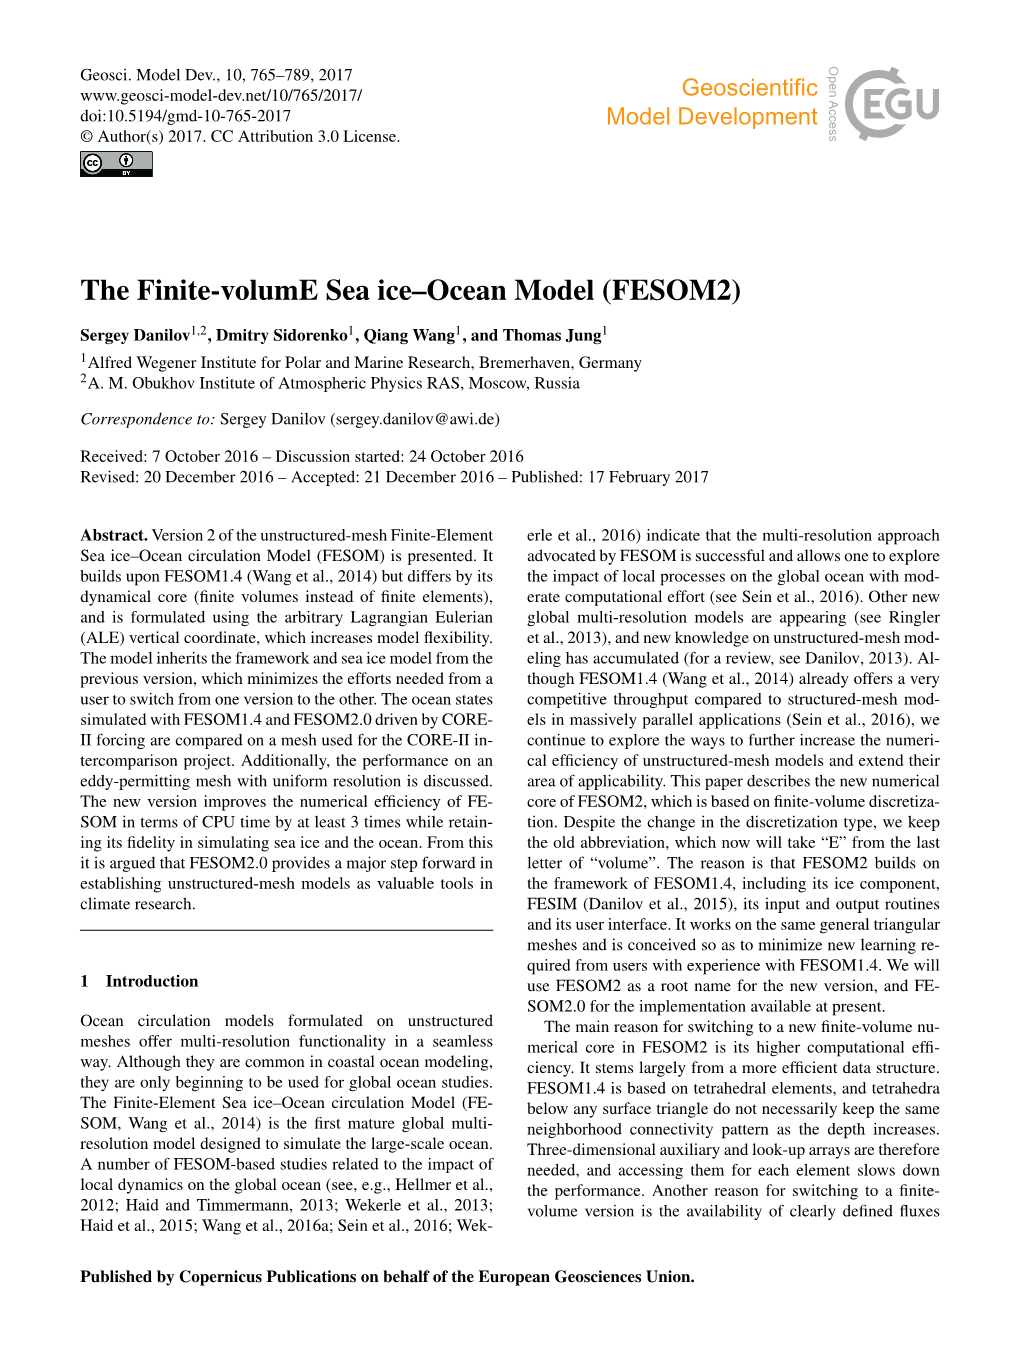 The Finite-Volume Sea Ice–Ocean Model (FESOM2)